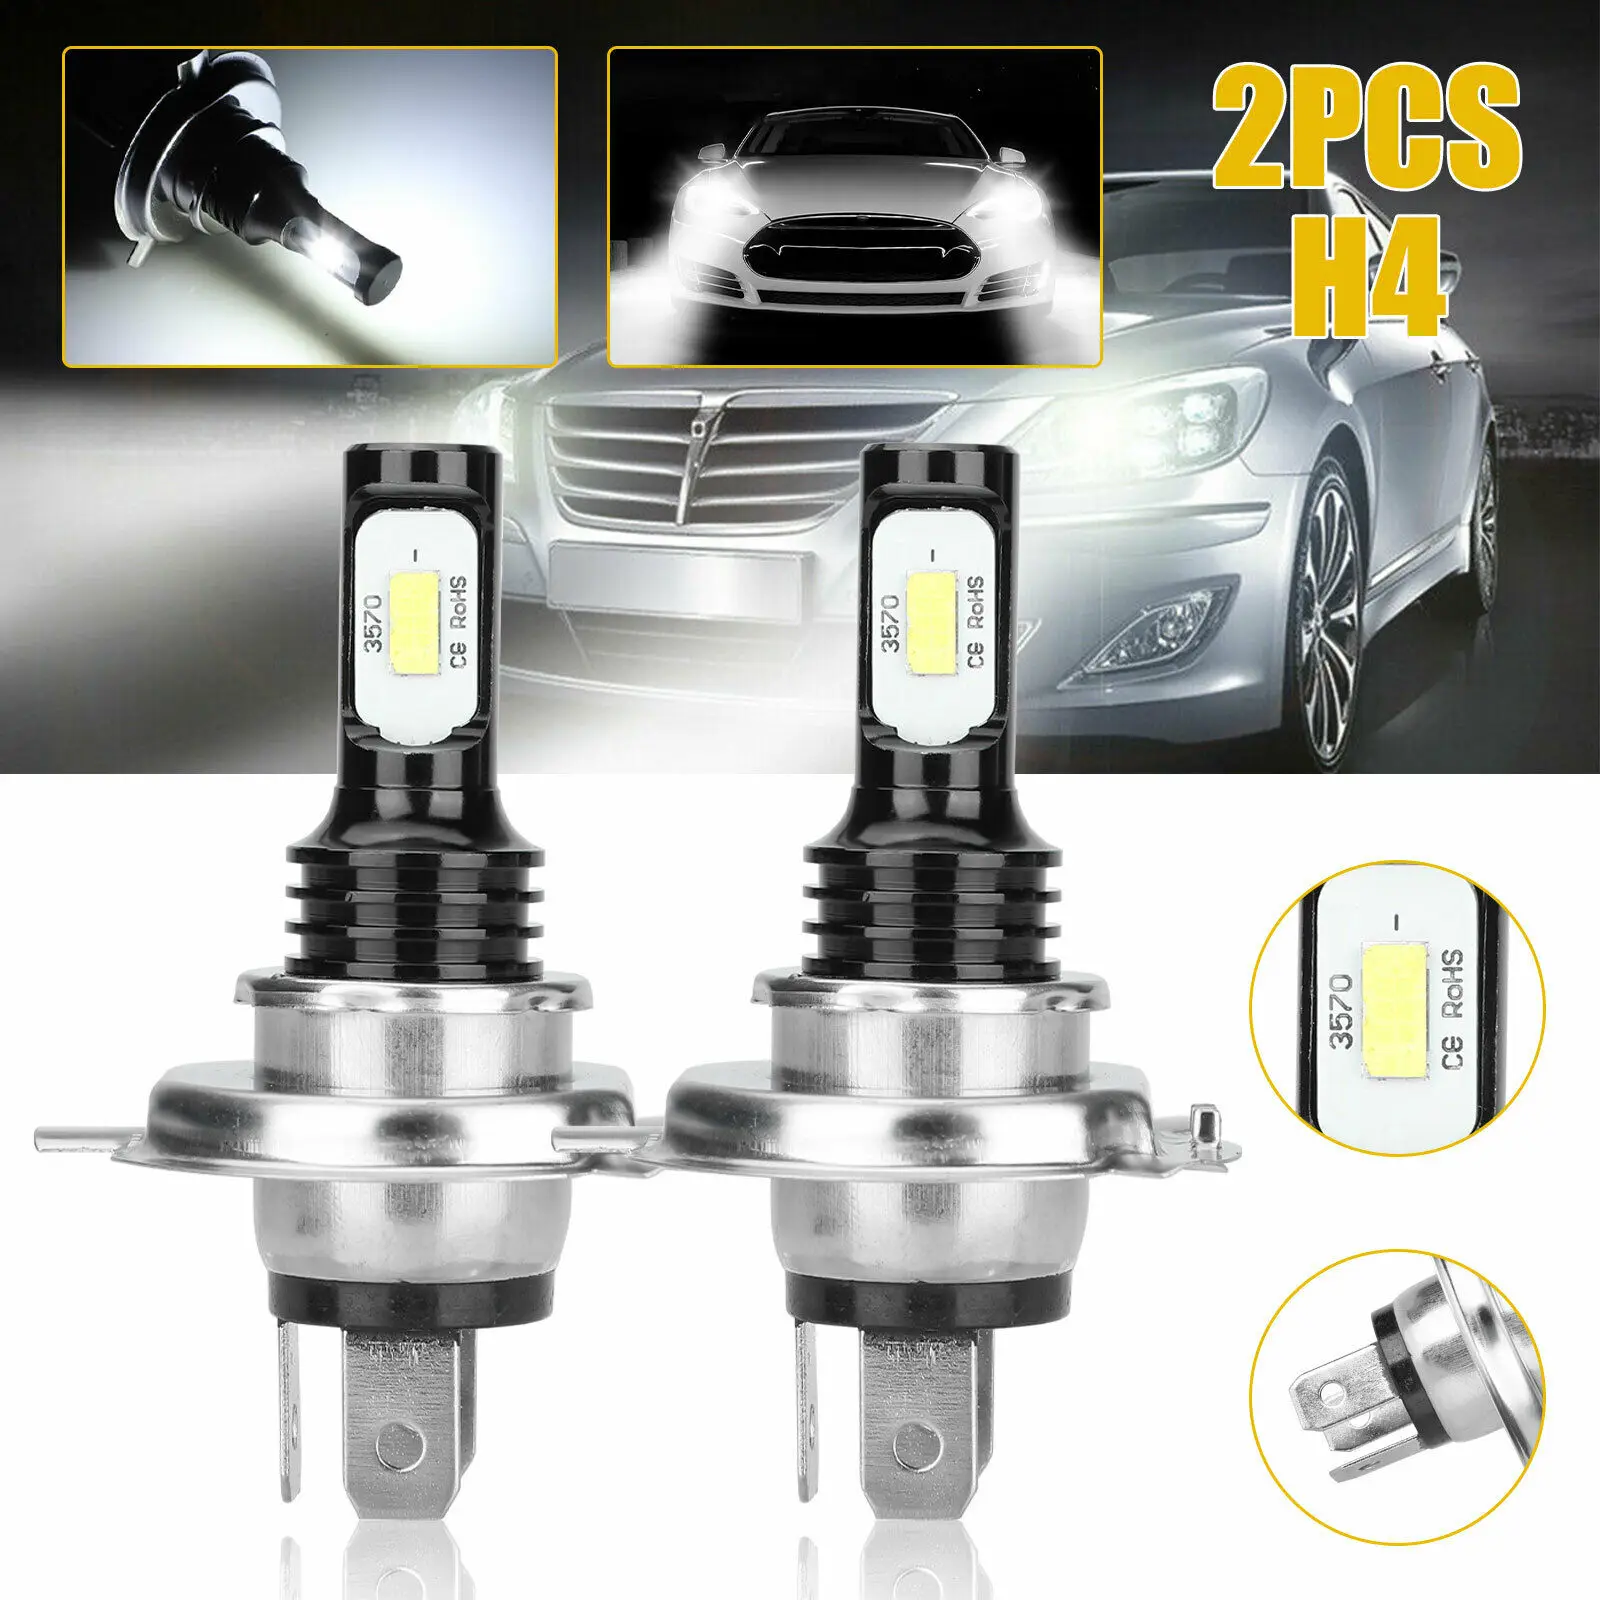 2x H7 LED Headlight Bulbs Kit 100W Super White 3570 6500K Canbus Error Free CAR DOWN LIGHT H1 H3 H4 H6 H8 H9 H11 H16 Auto Lights